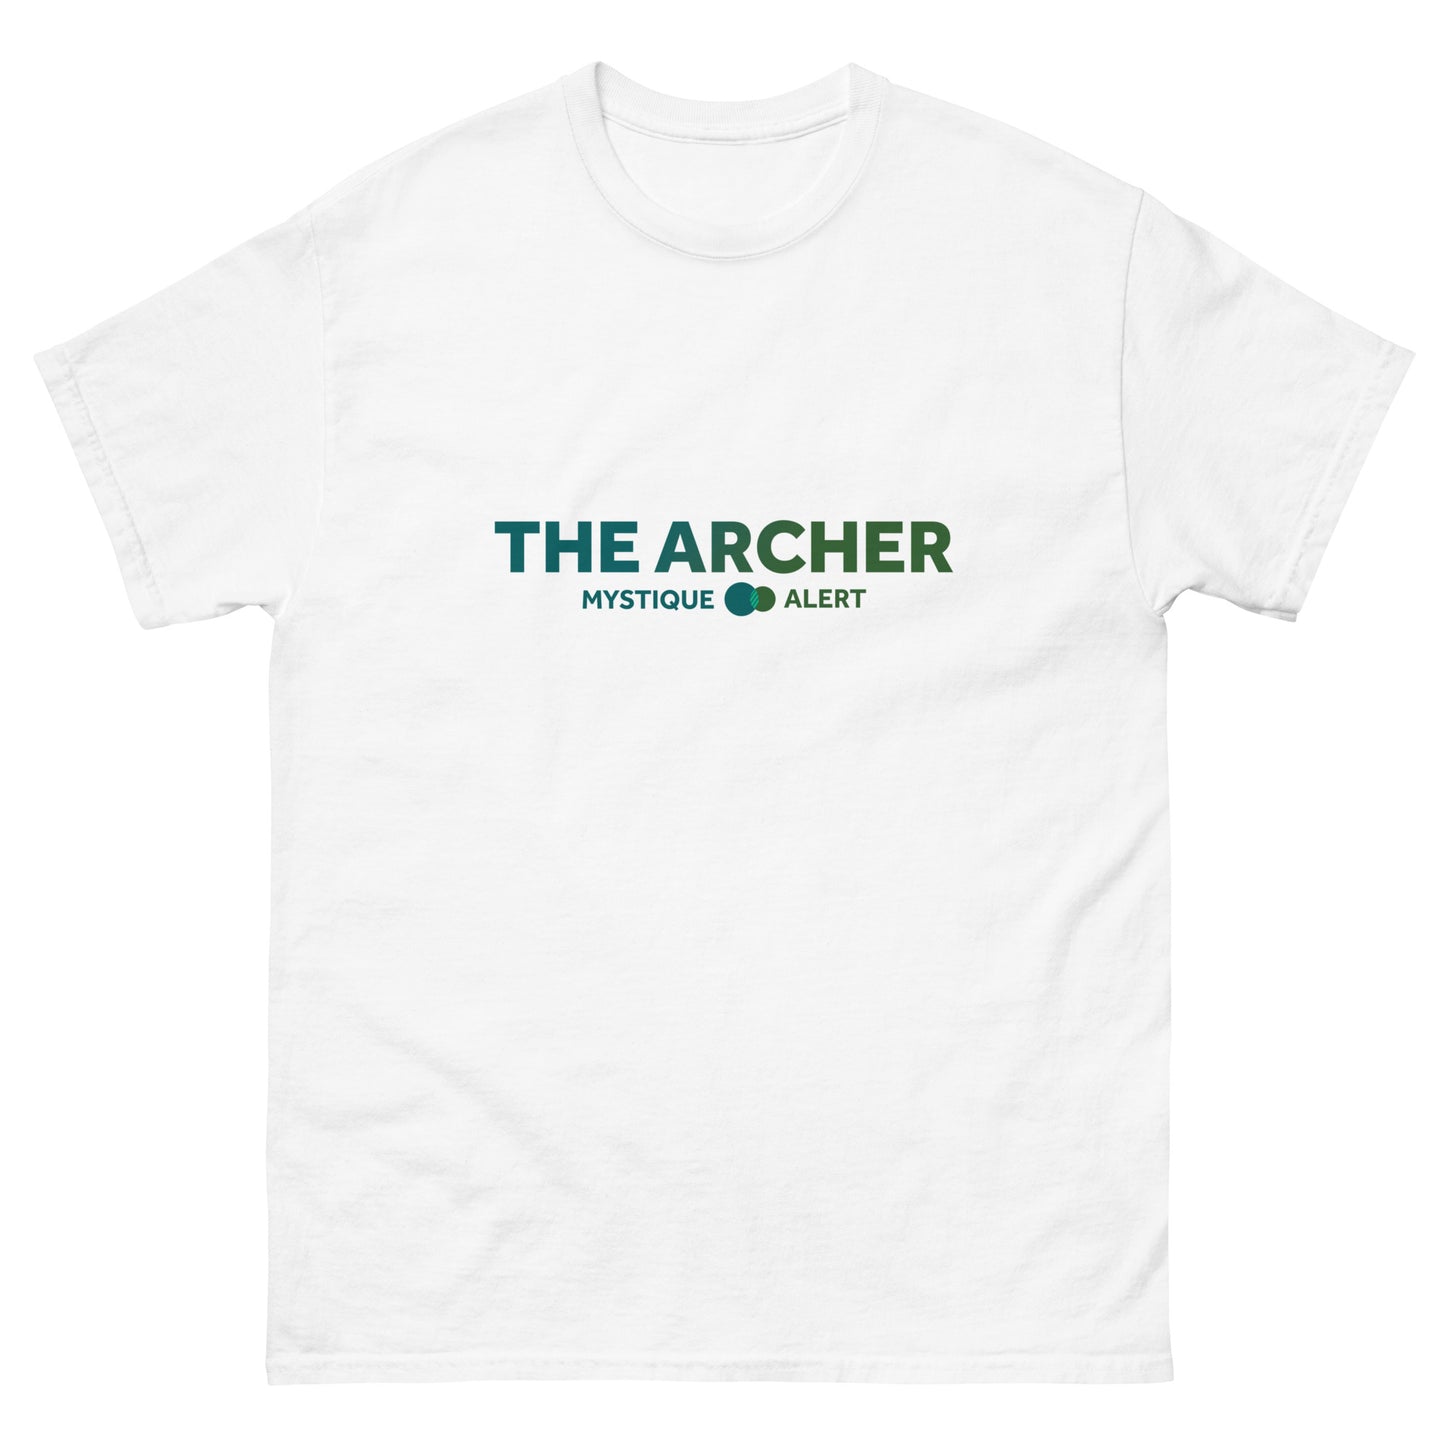 The Archer - Men's Archetype short sleeve t-shirt